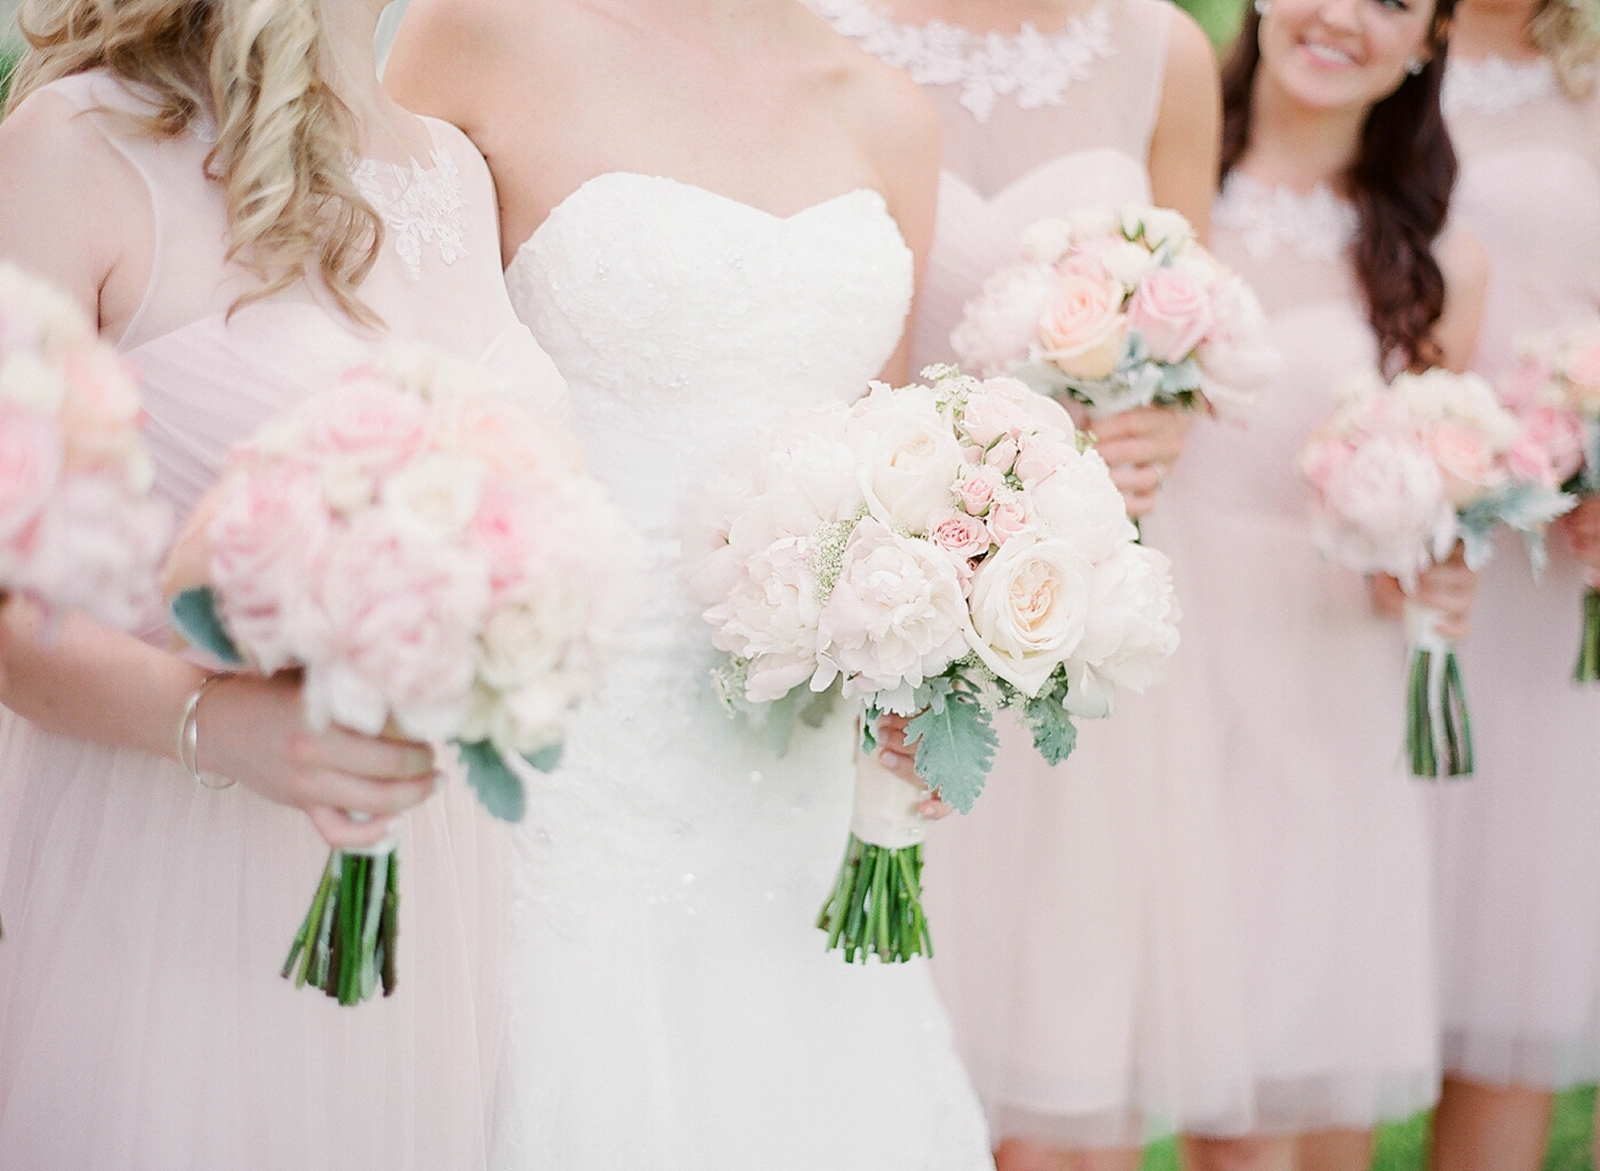 Chatauqua Lake Athenaeum Hotel Wedding blush bridesmaids dresses